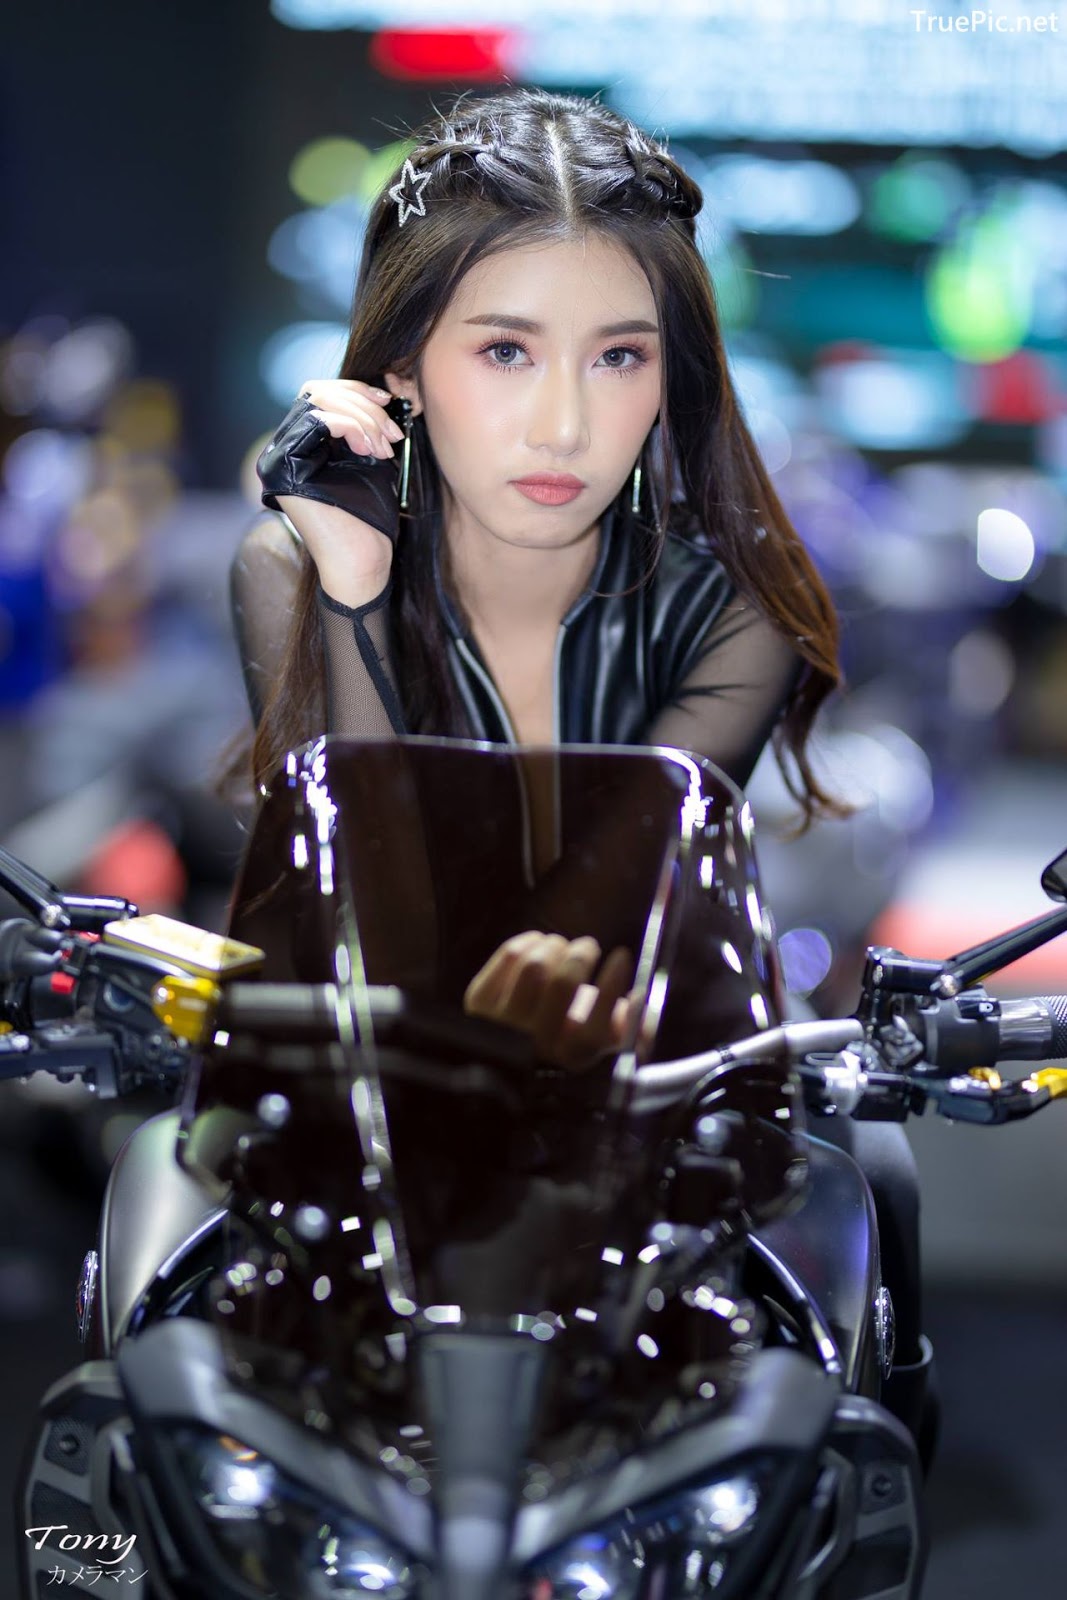 Image-Thailand-Hot-Model-Thai-Racing-Girl-At-Big-Motor-2018-TruePic.net- Picture-49